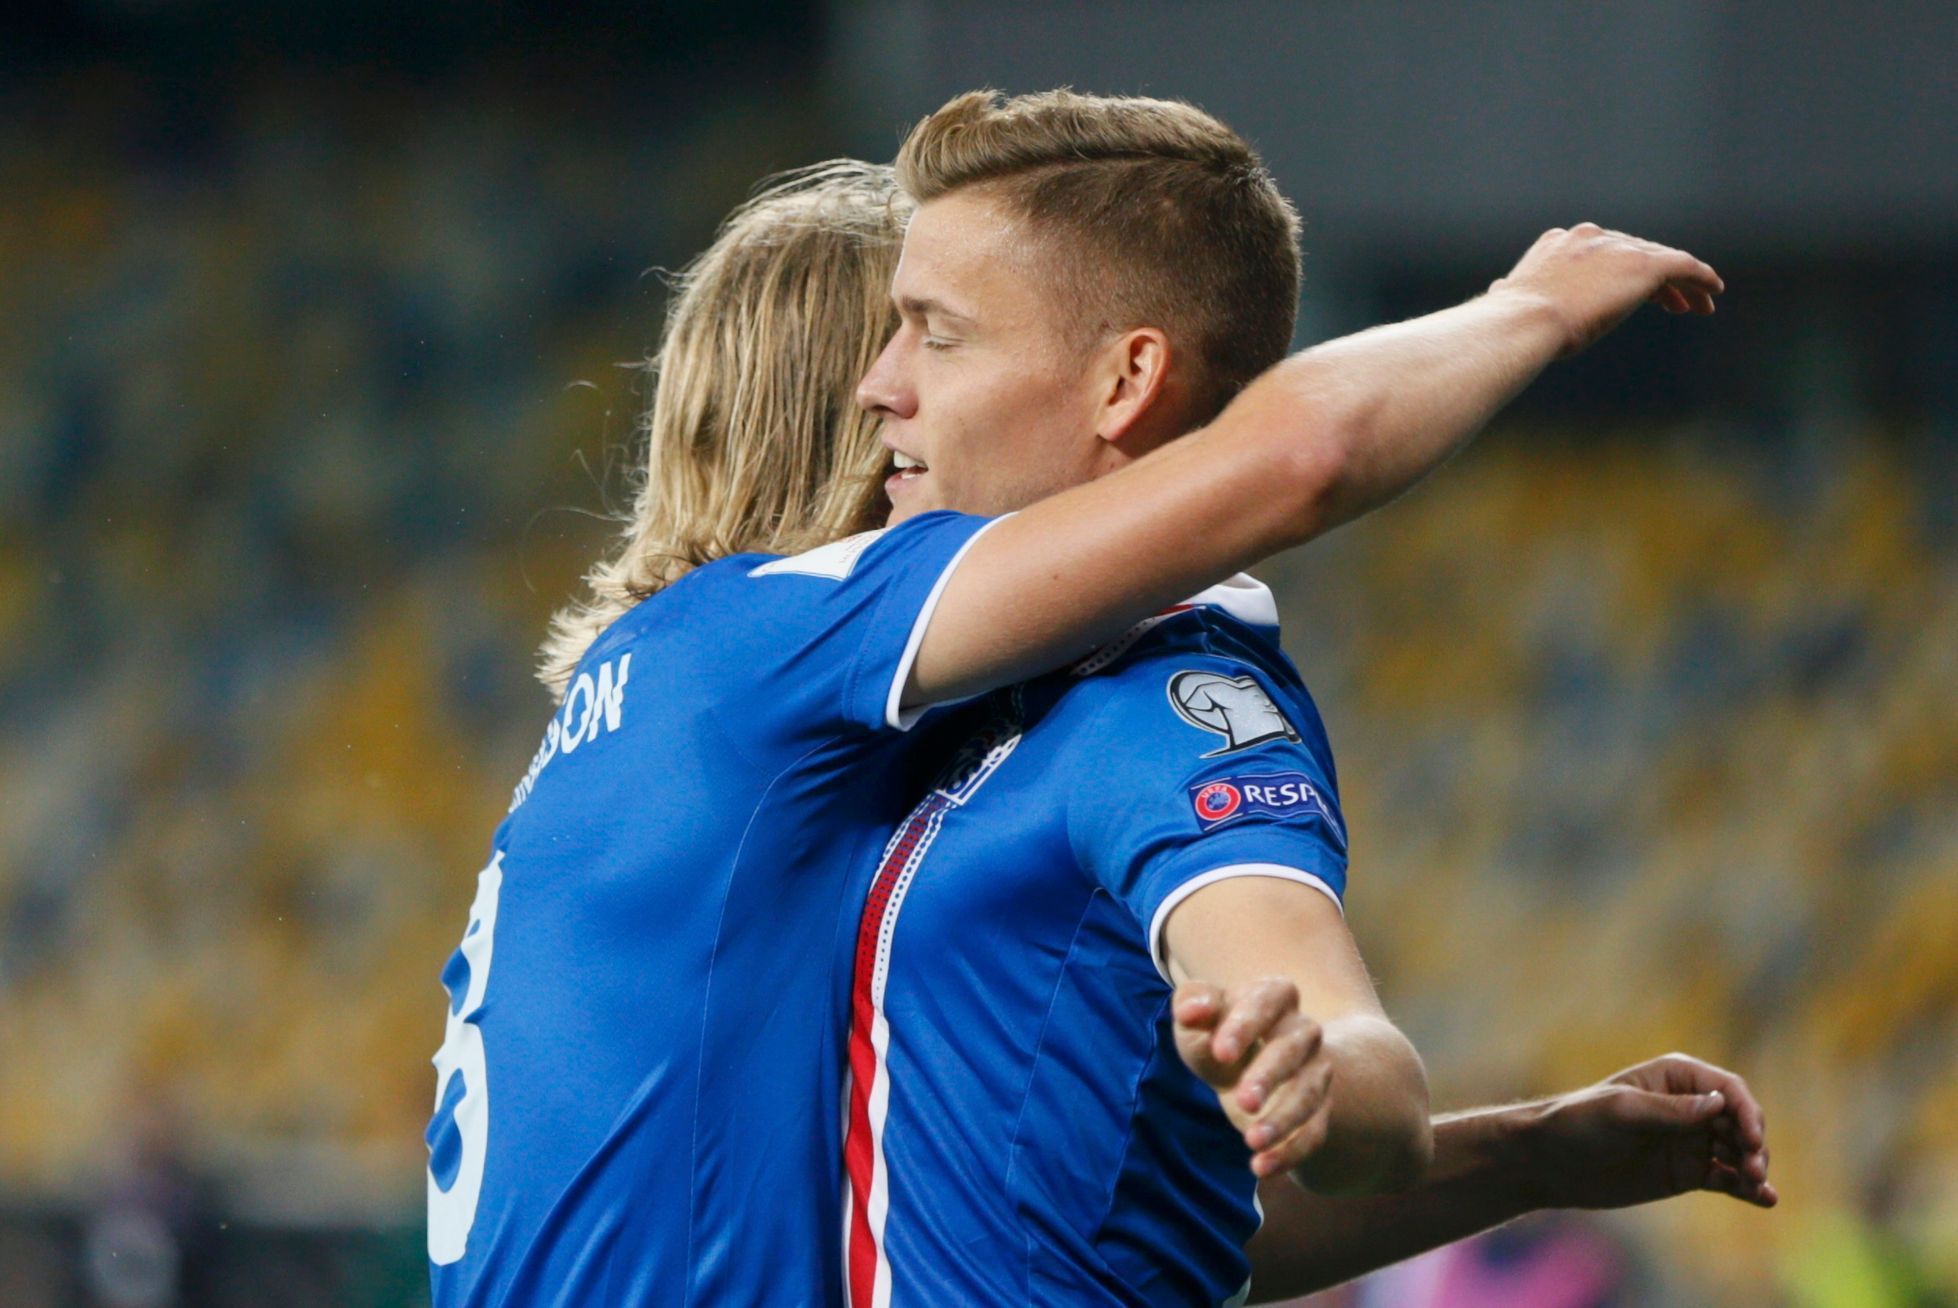 Island se raduje z branky v kvalifikaci o MS 2018